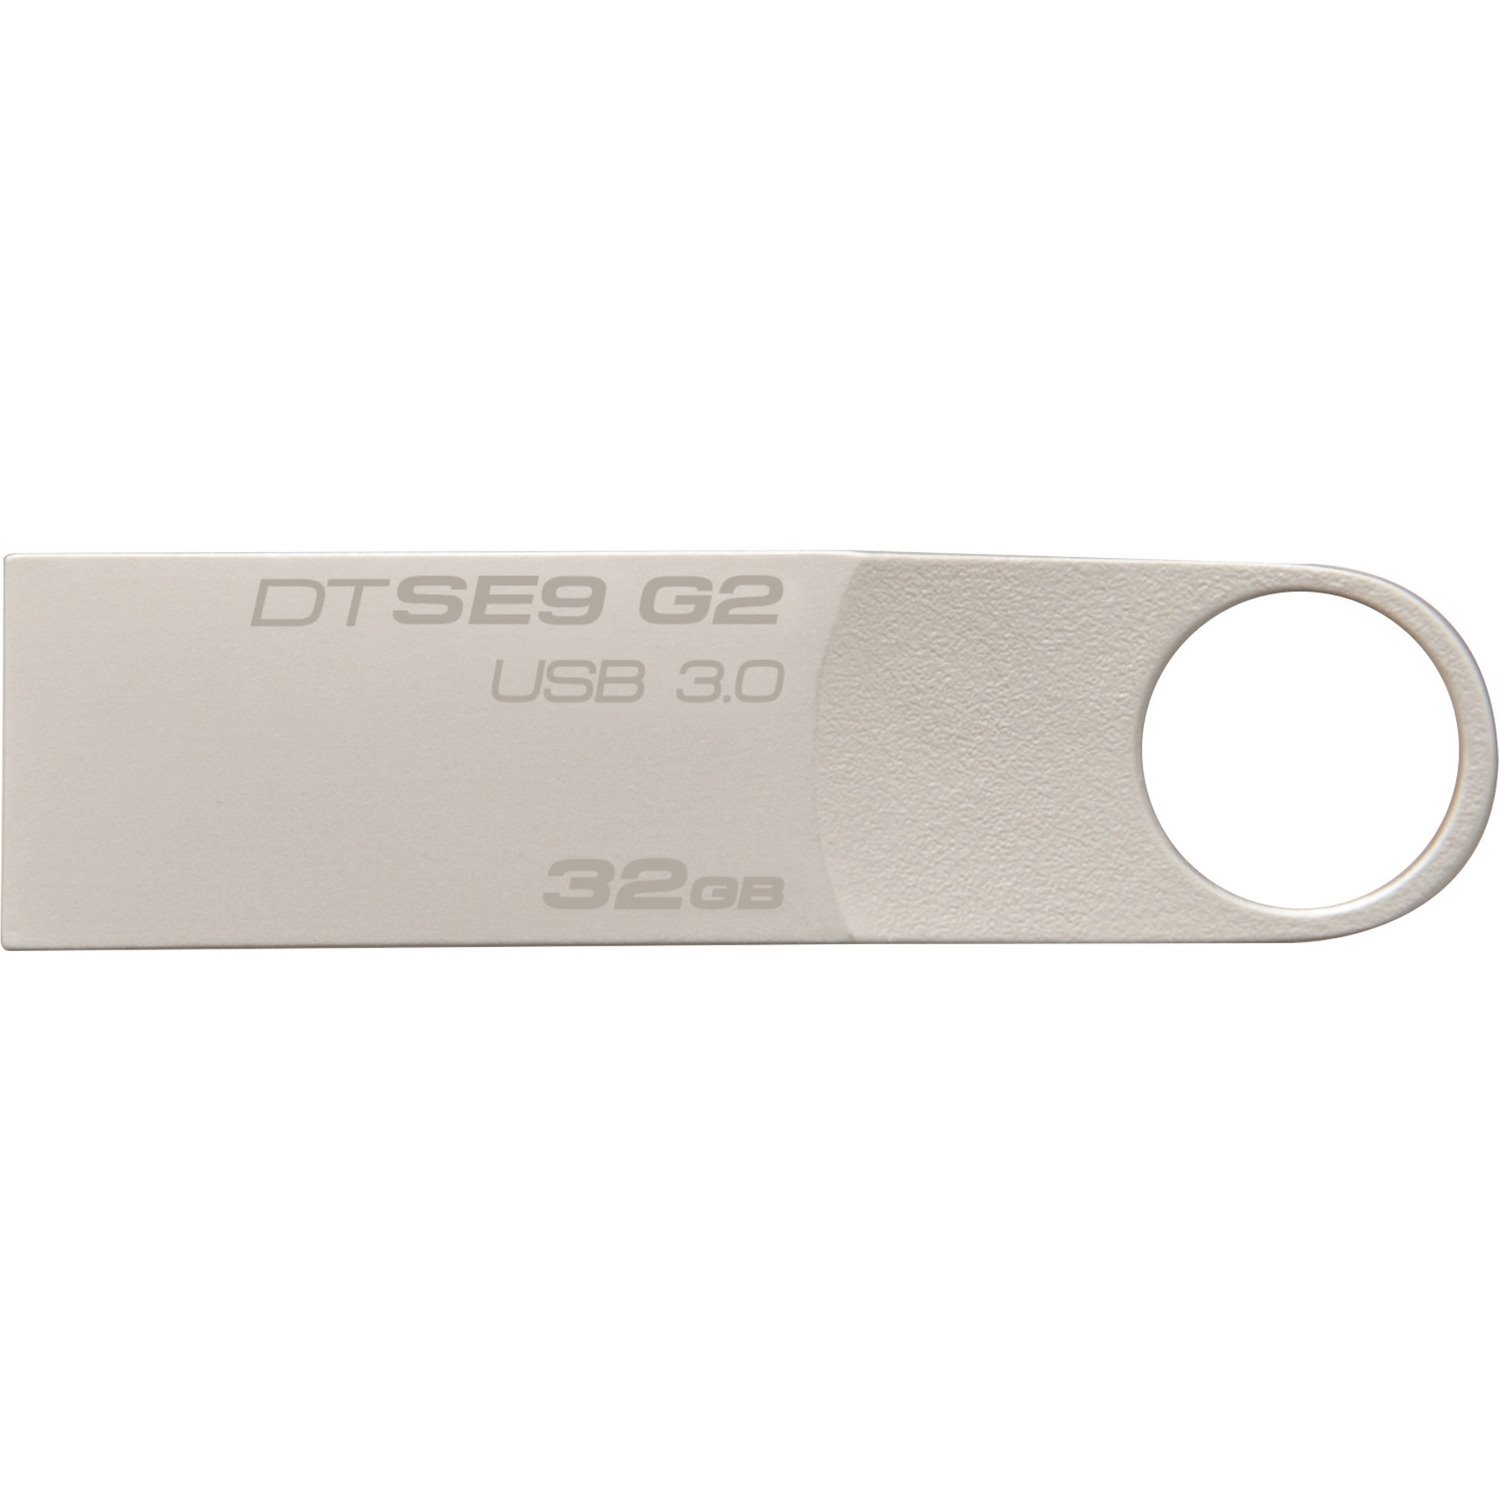 Kingston DataTraveler SE9 G2 32 GB USB 3.0 Flash Drive